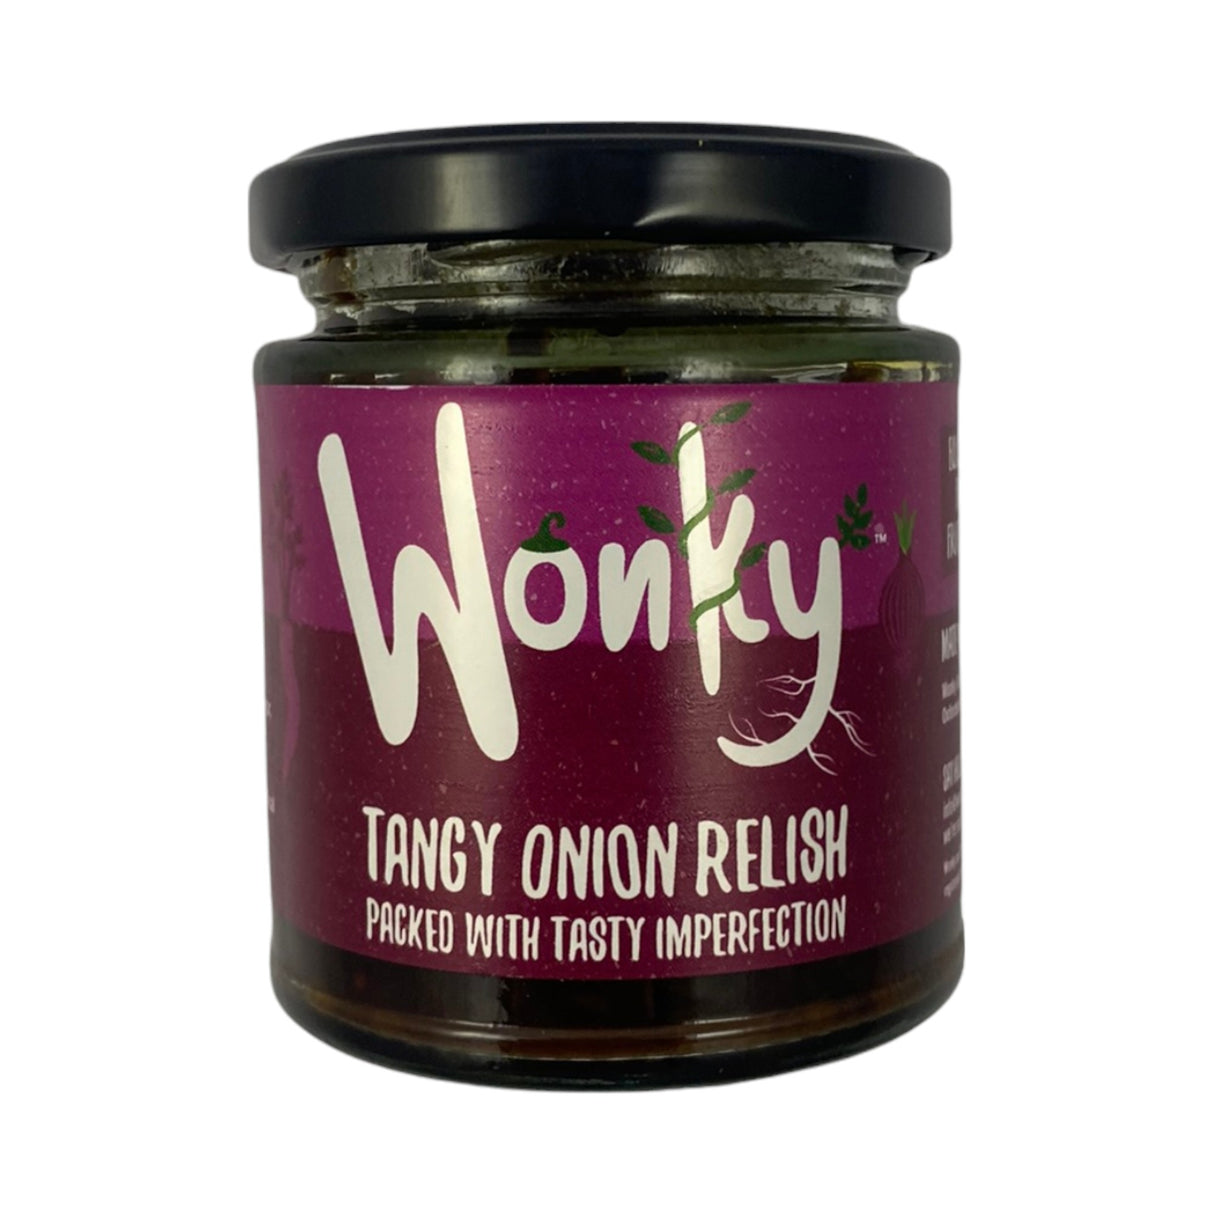 Wonky - Tangy Onion Relish 200g